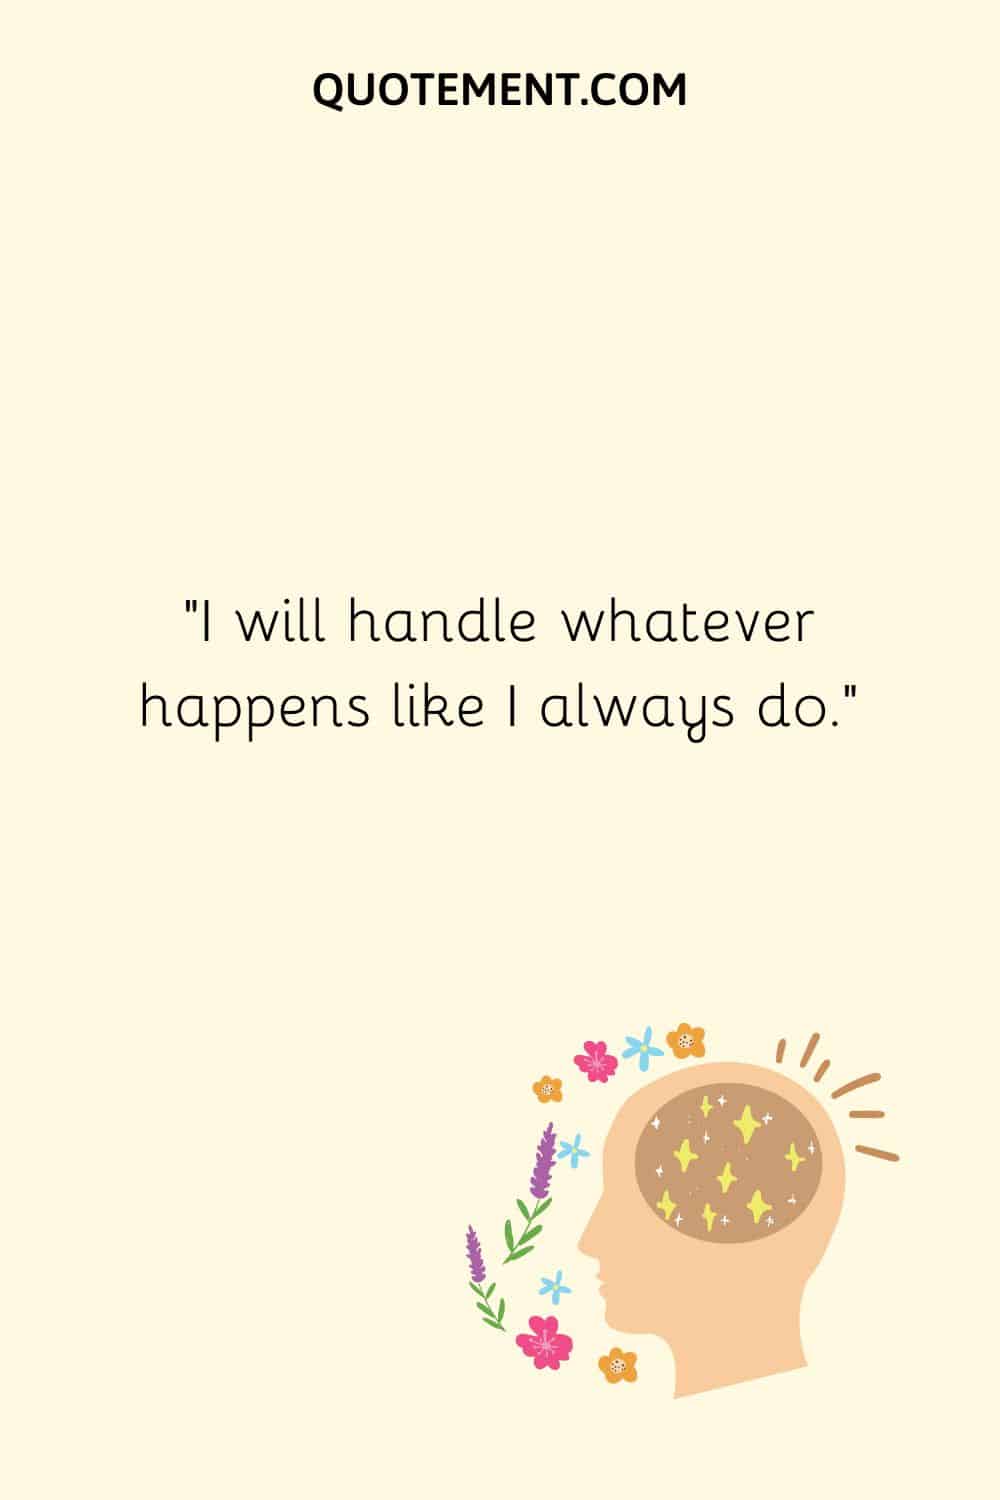 I will handle whatever happens like I always do